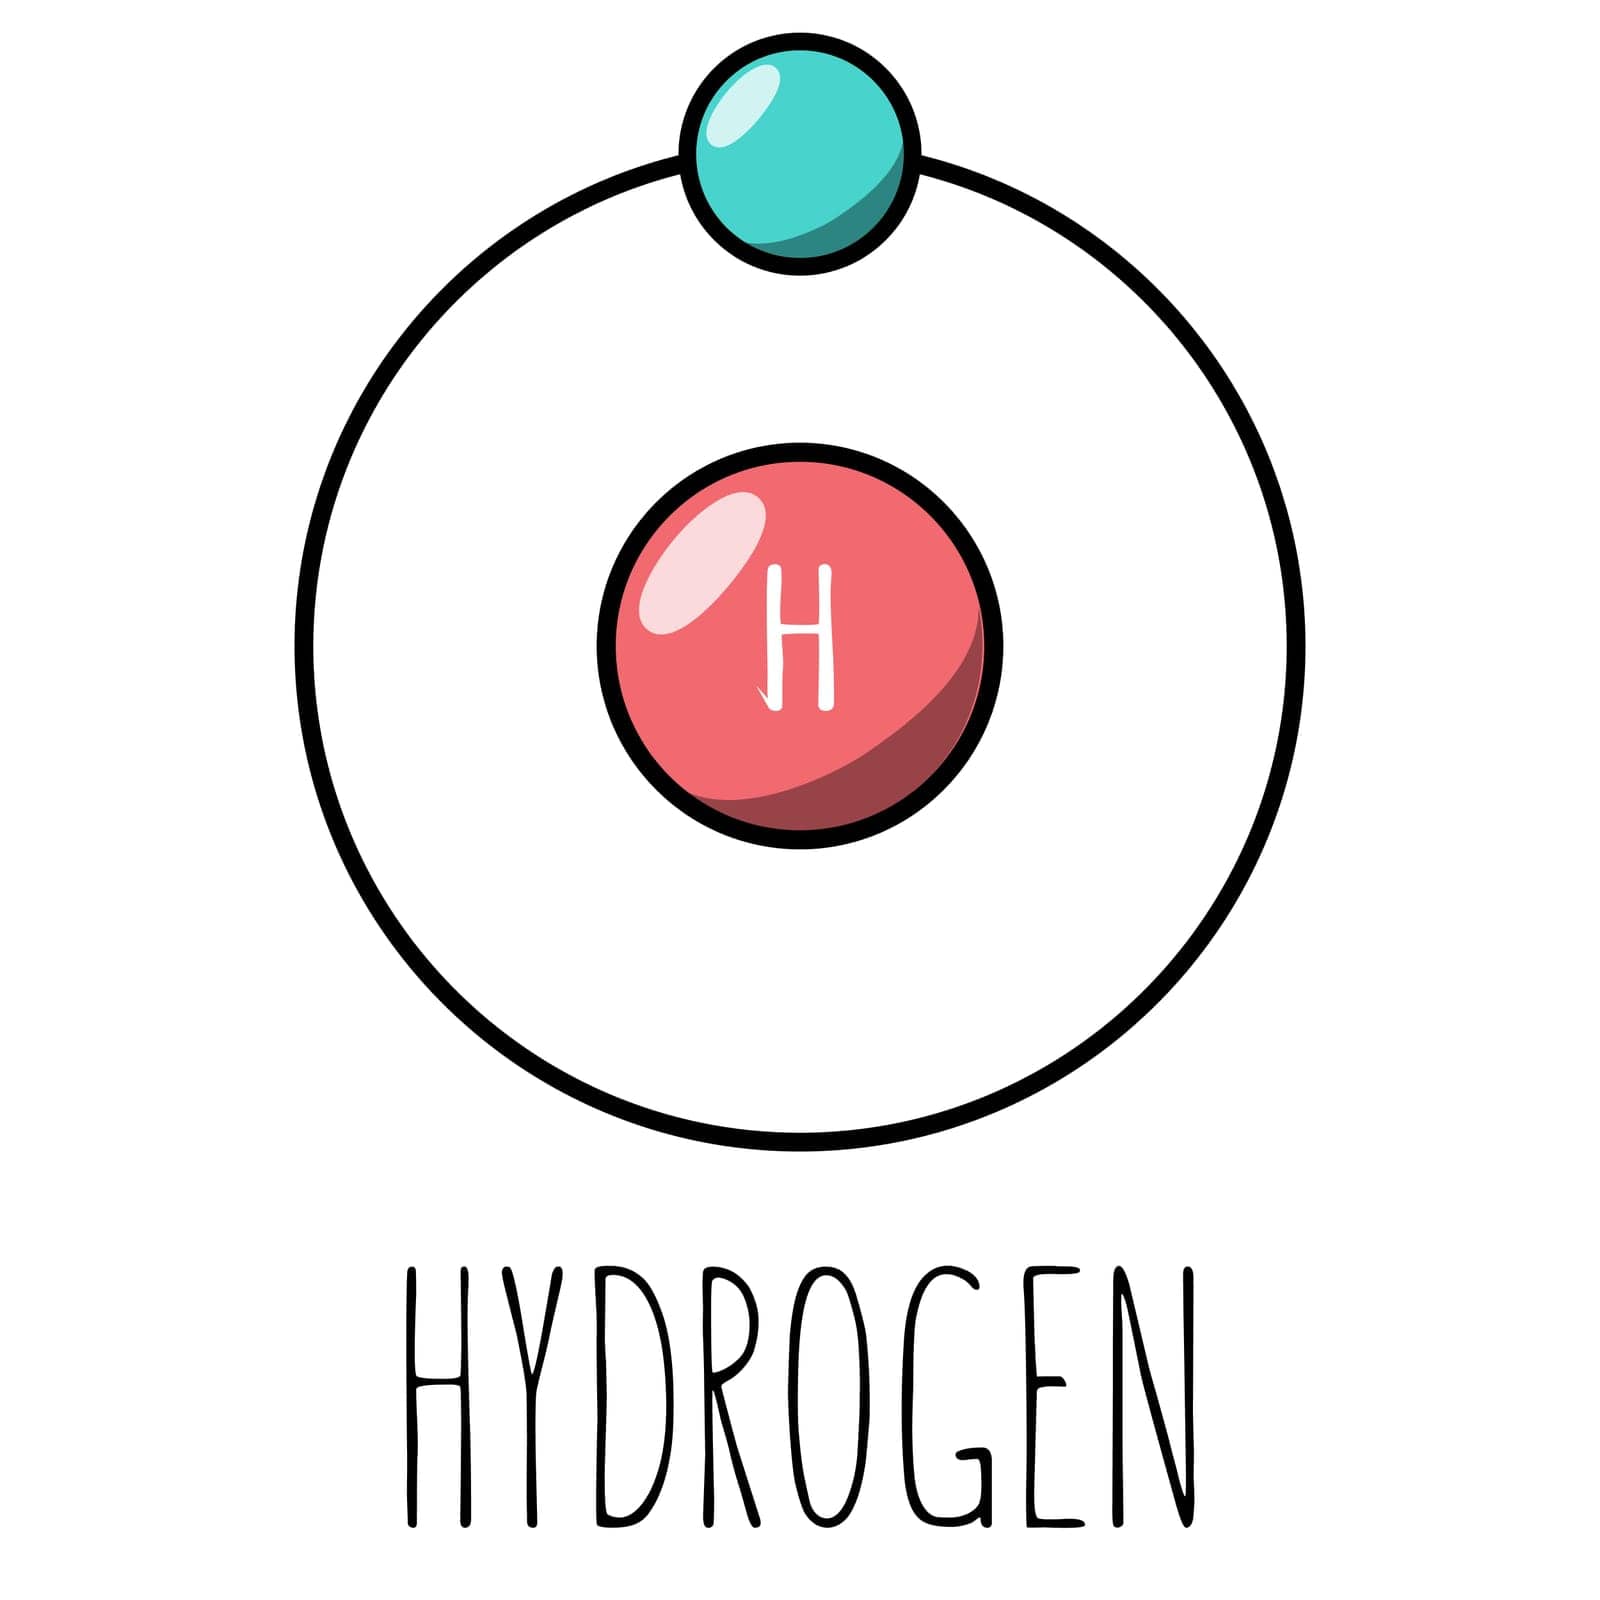 Hydrogen atom Bohr model. Cartoon style. Vector editable